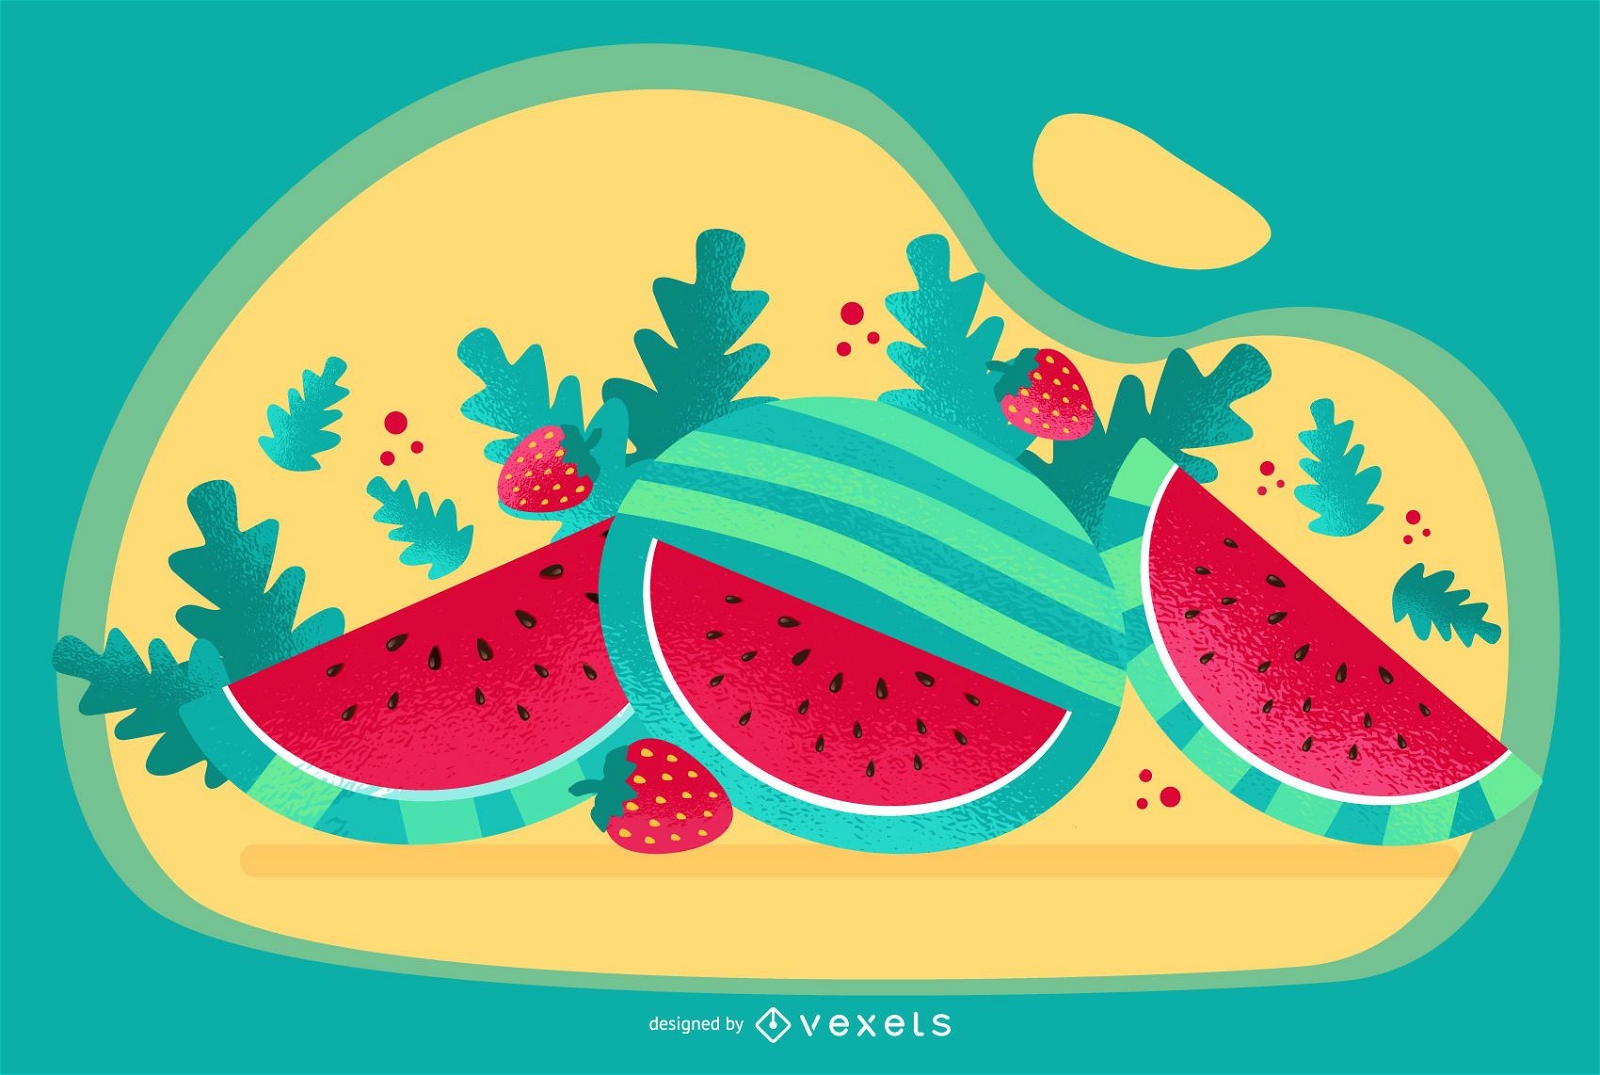 Watermelon Art Vector Design